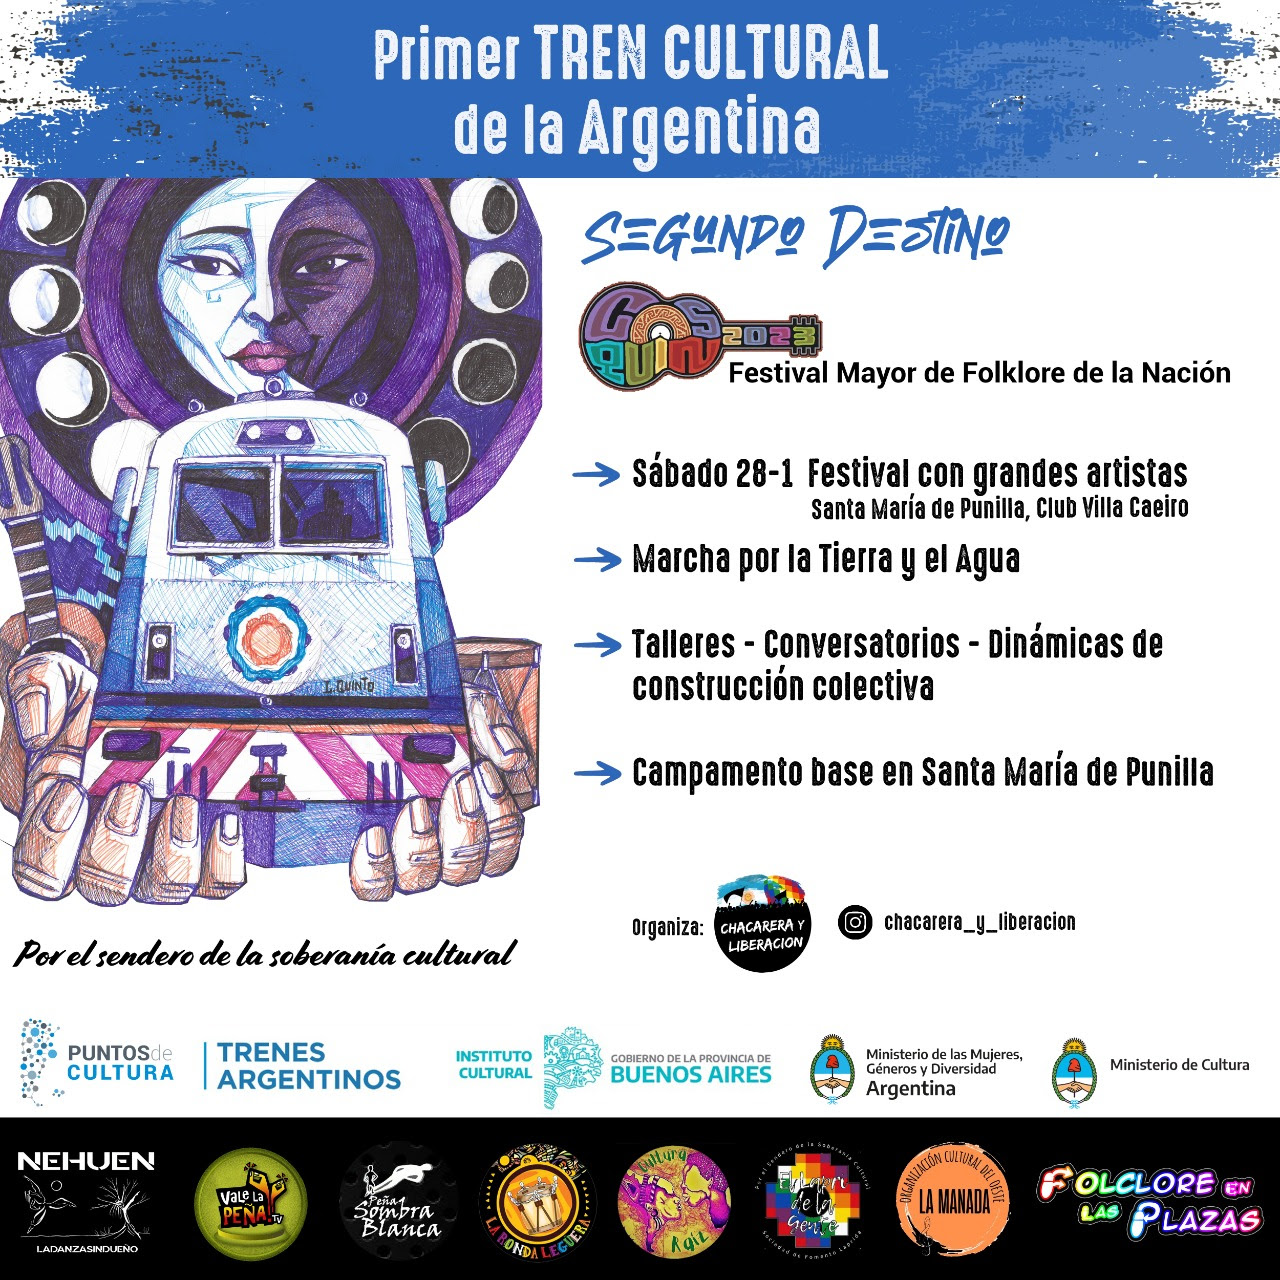 Primer Tren Cultural de la Argentina realiza su segundo destino hacia el Festival Nacional del Folclore de Cosqun 2023